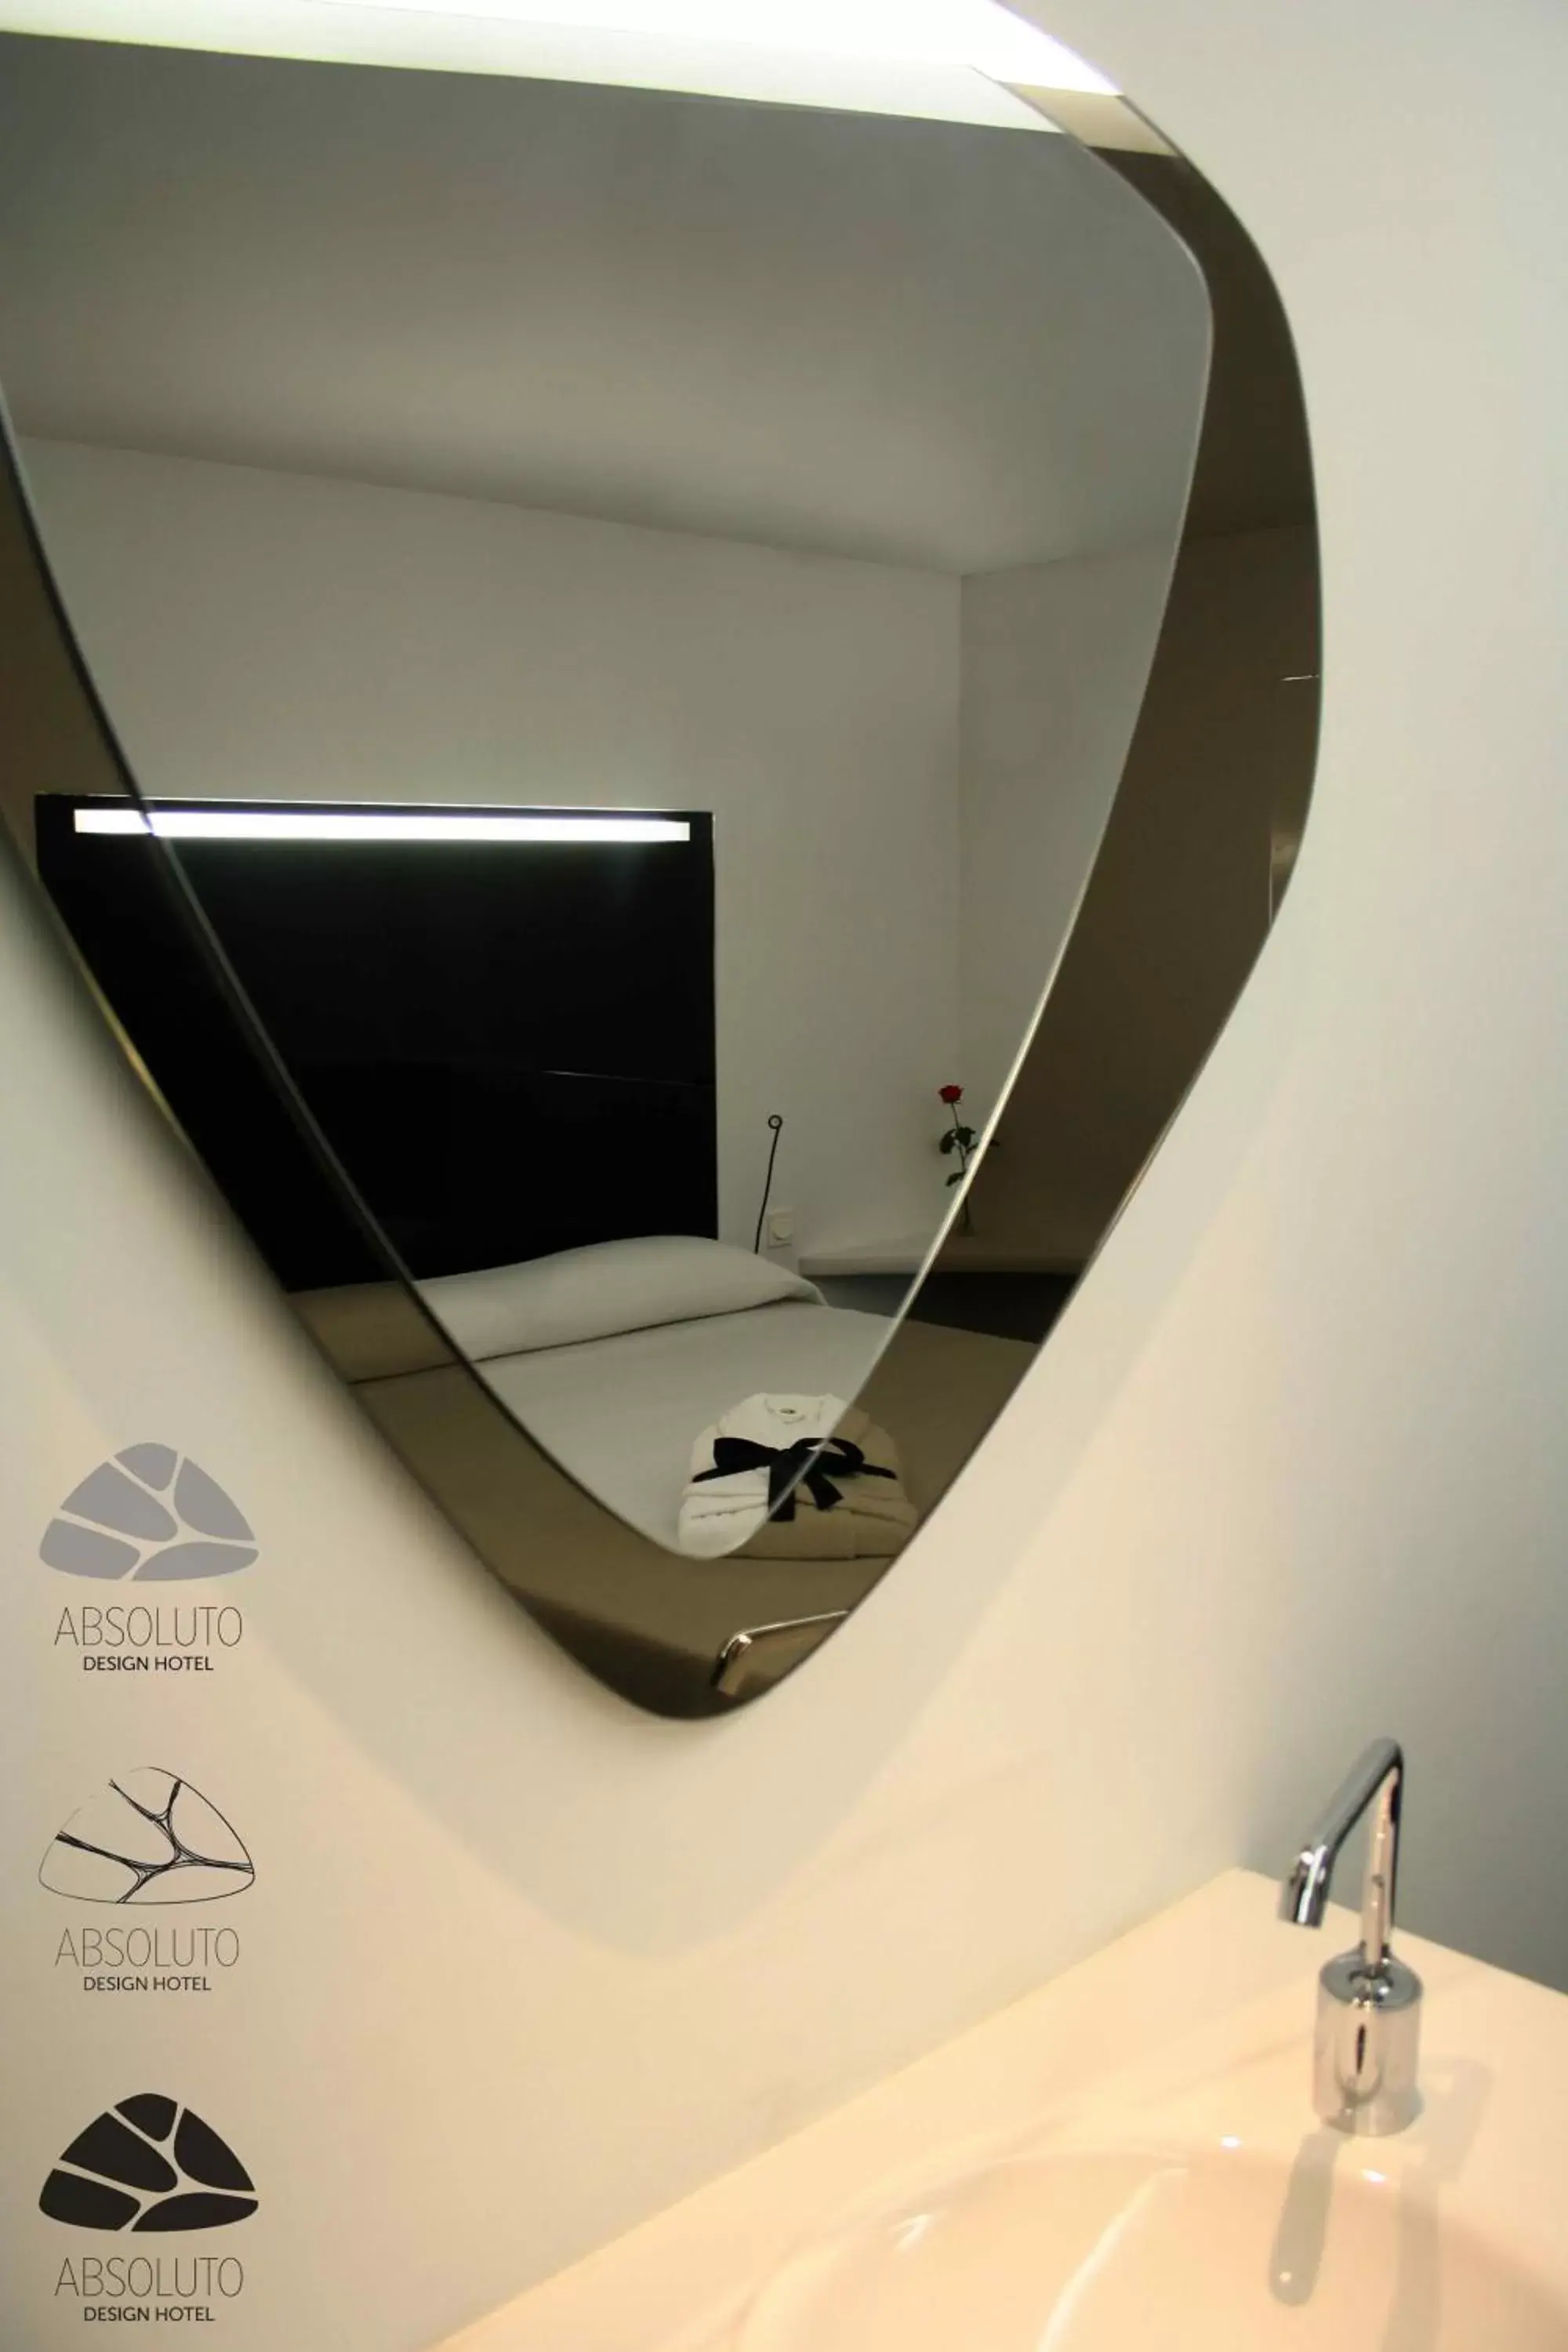 Bathroom, TV/Entertainment Center in Absoluto Design Hotel